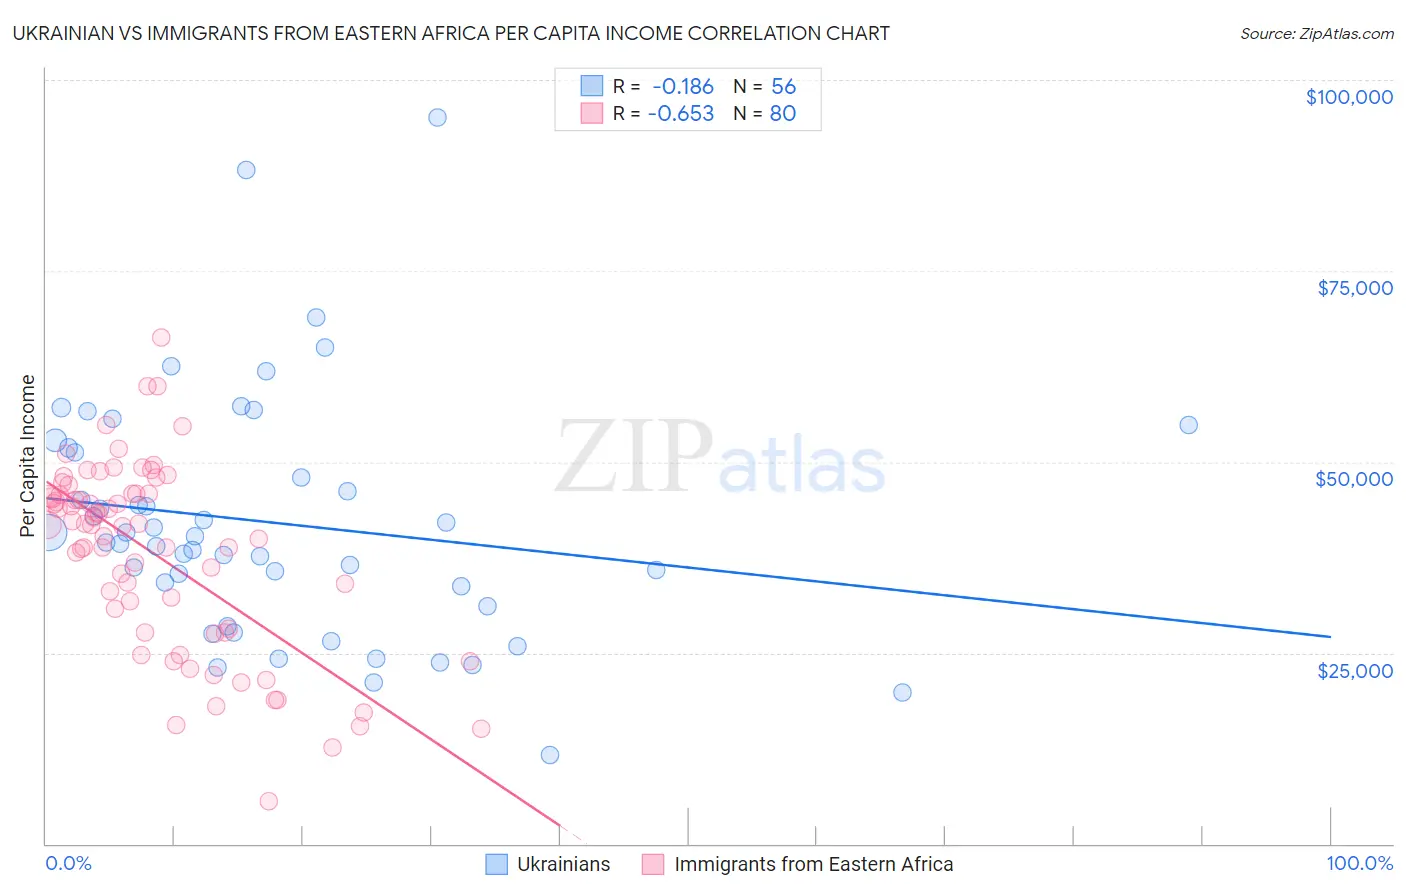 Ukrainian vs Immigrants from Eastern Africa Per Capita Income